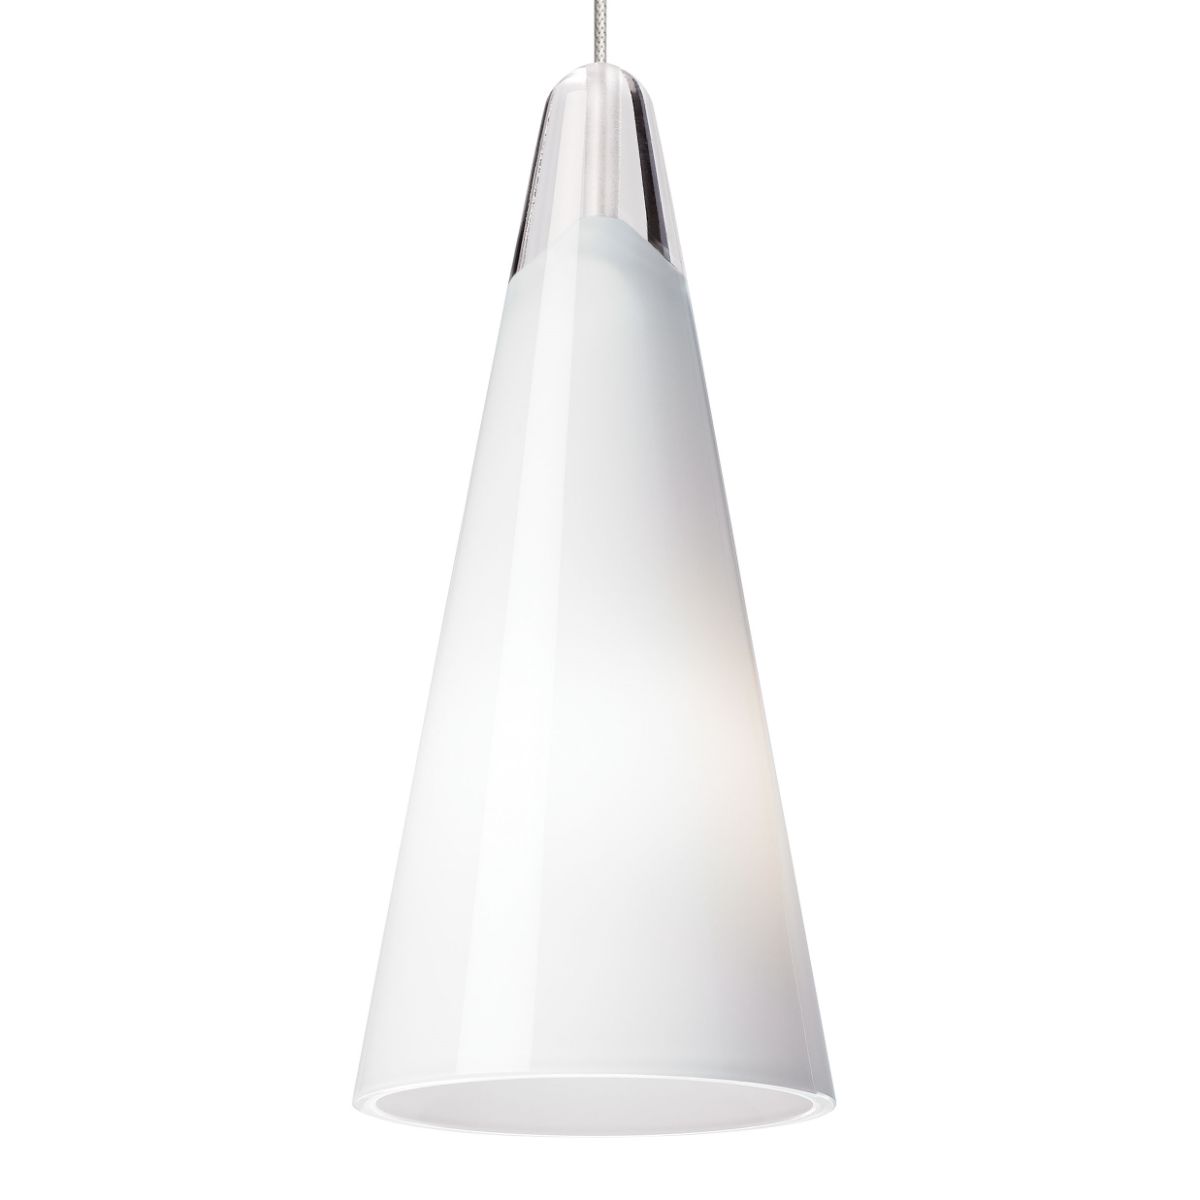 Selina Monorail Cone Pendant Light Satin Nickel White Finish